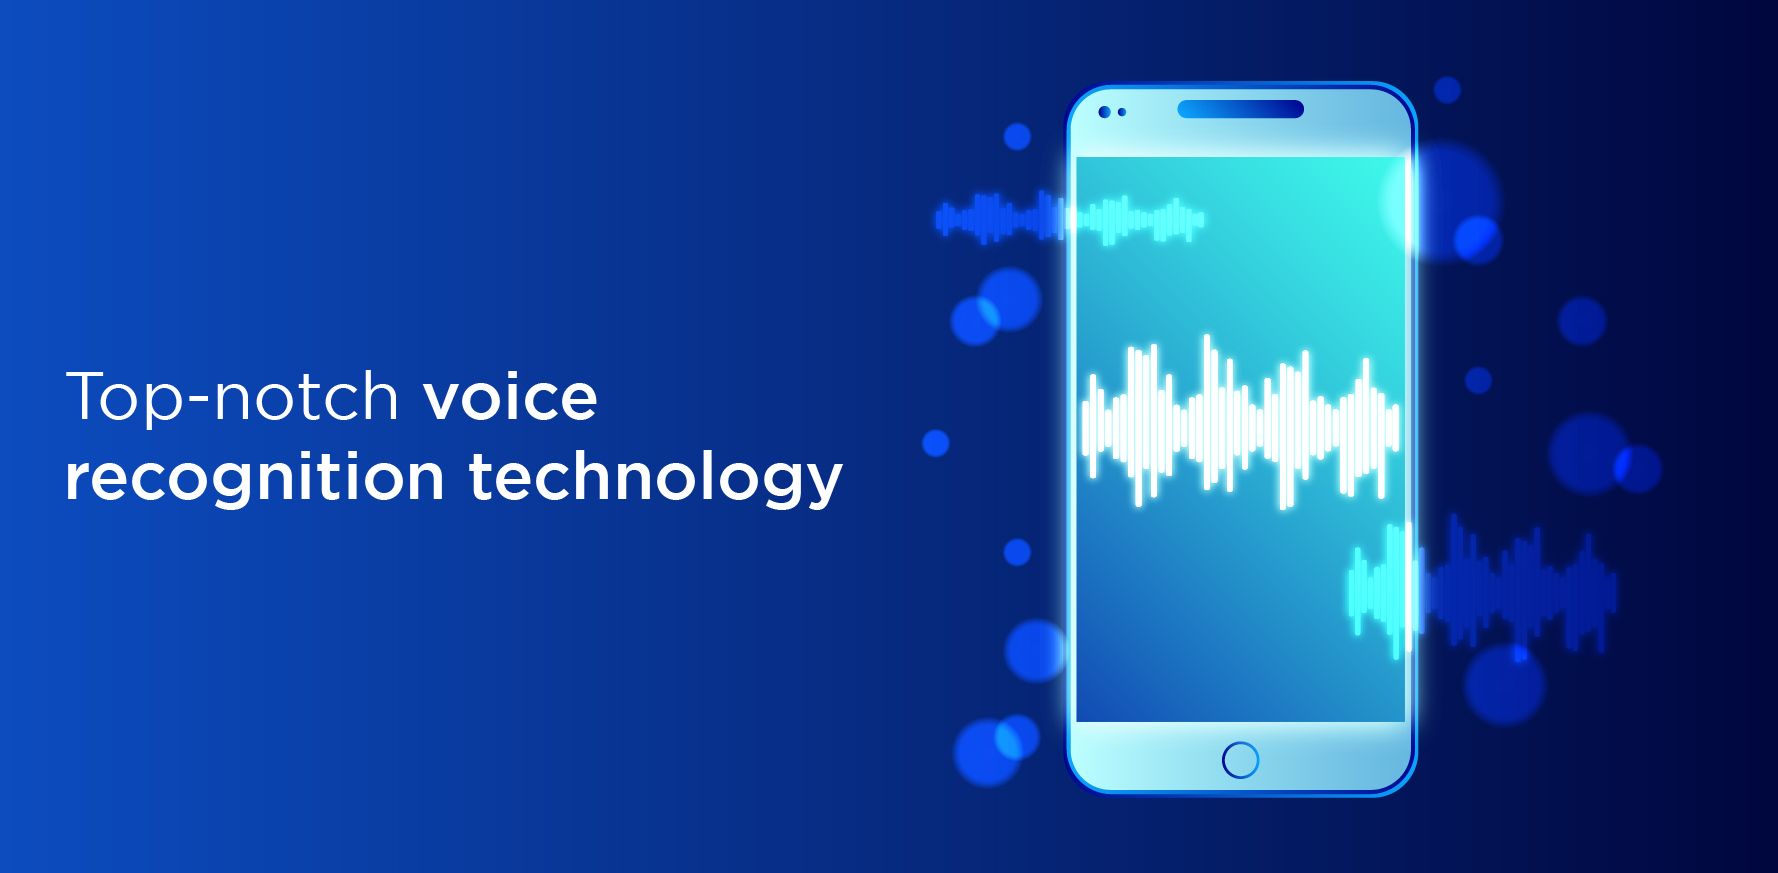 Top-notch voice recognition technology